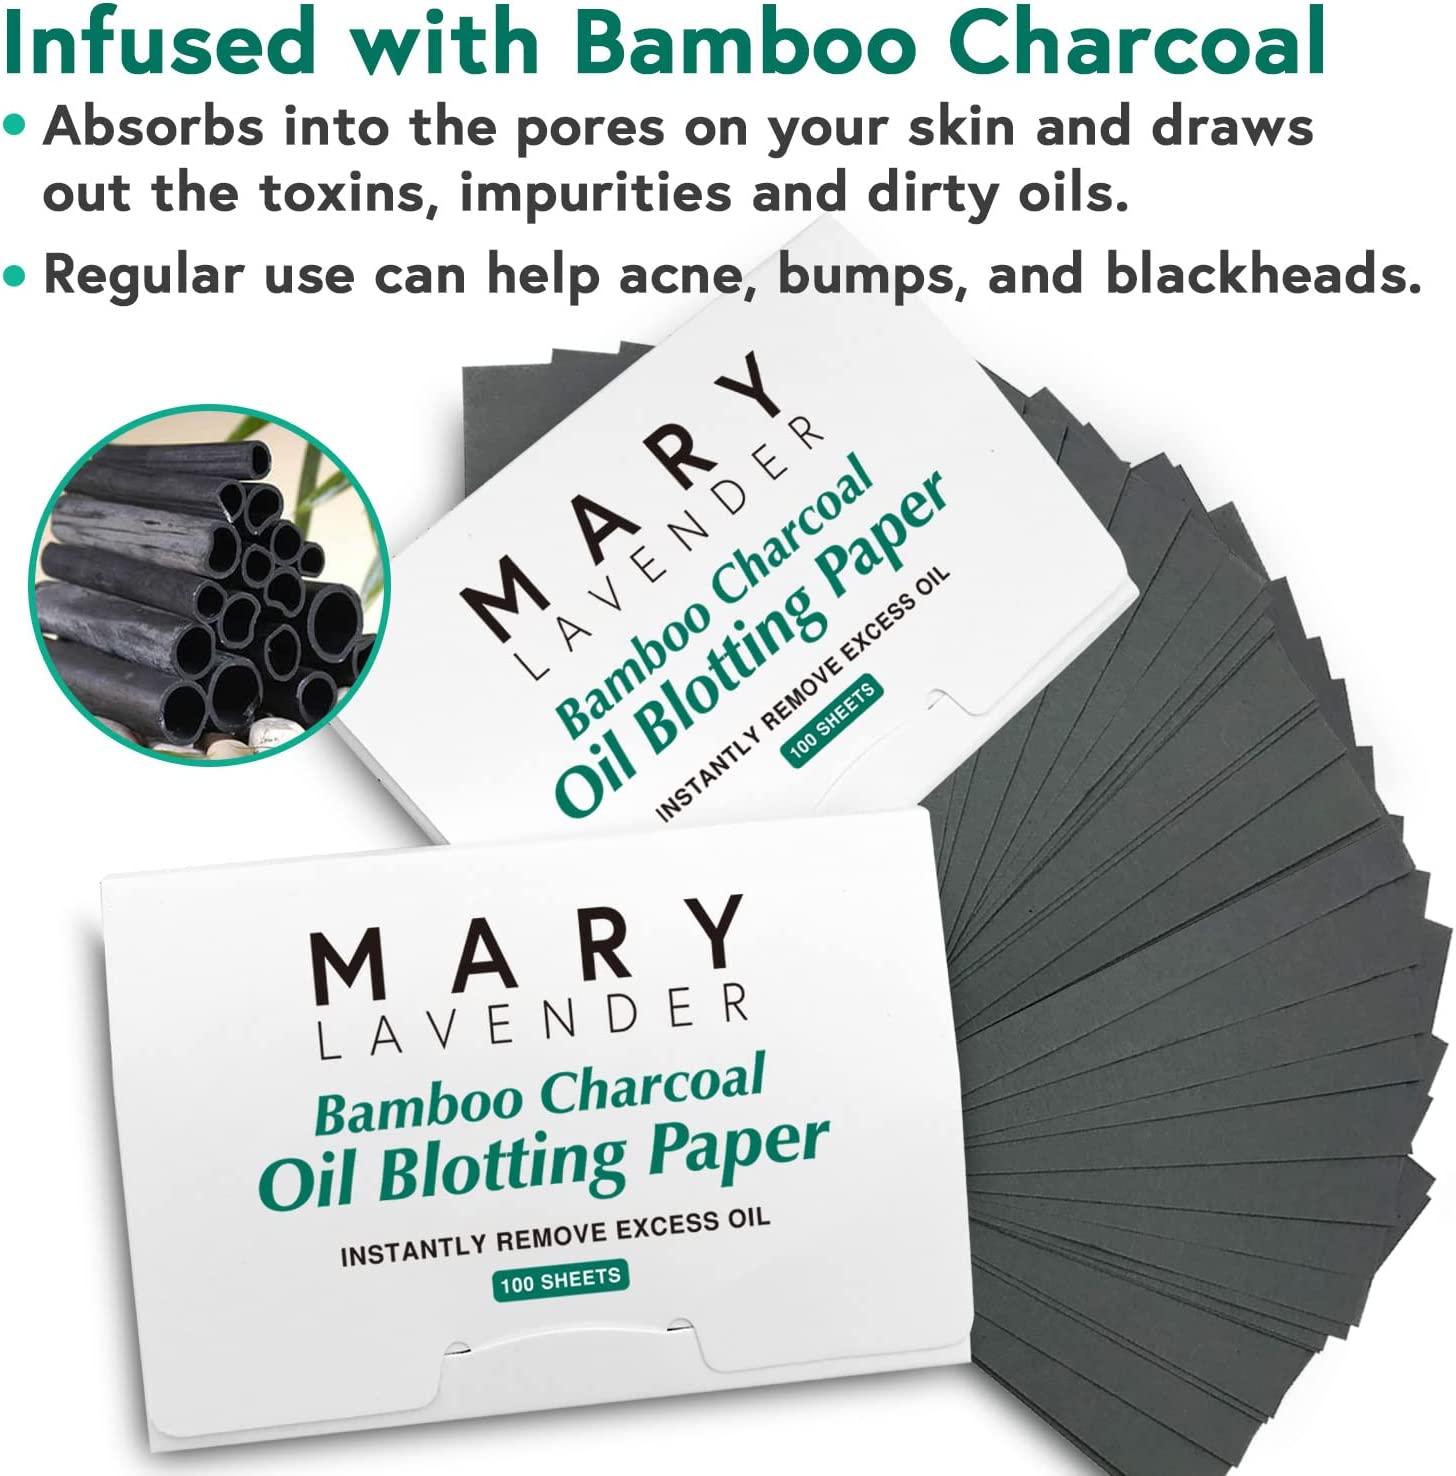 Charcoal Oil Blotting Paper